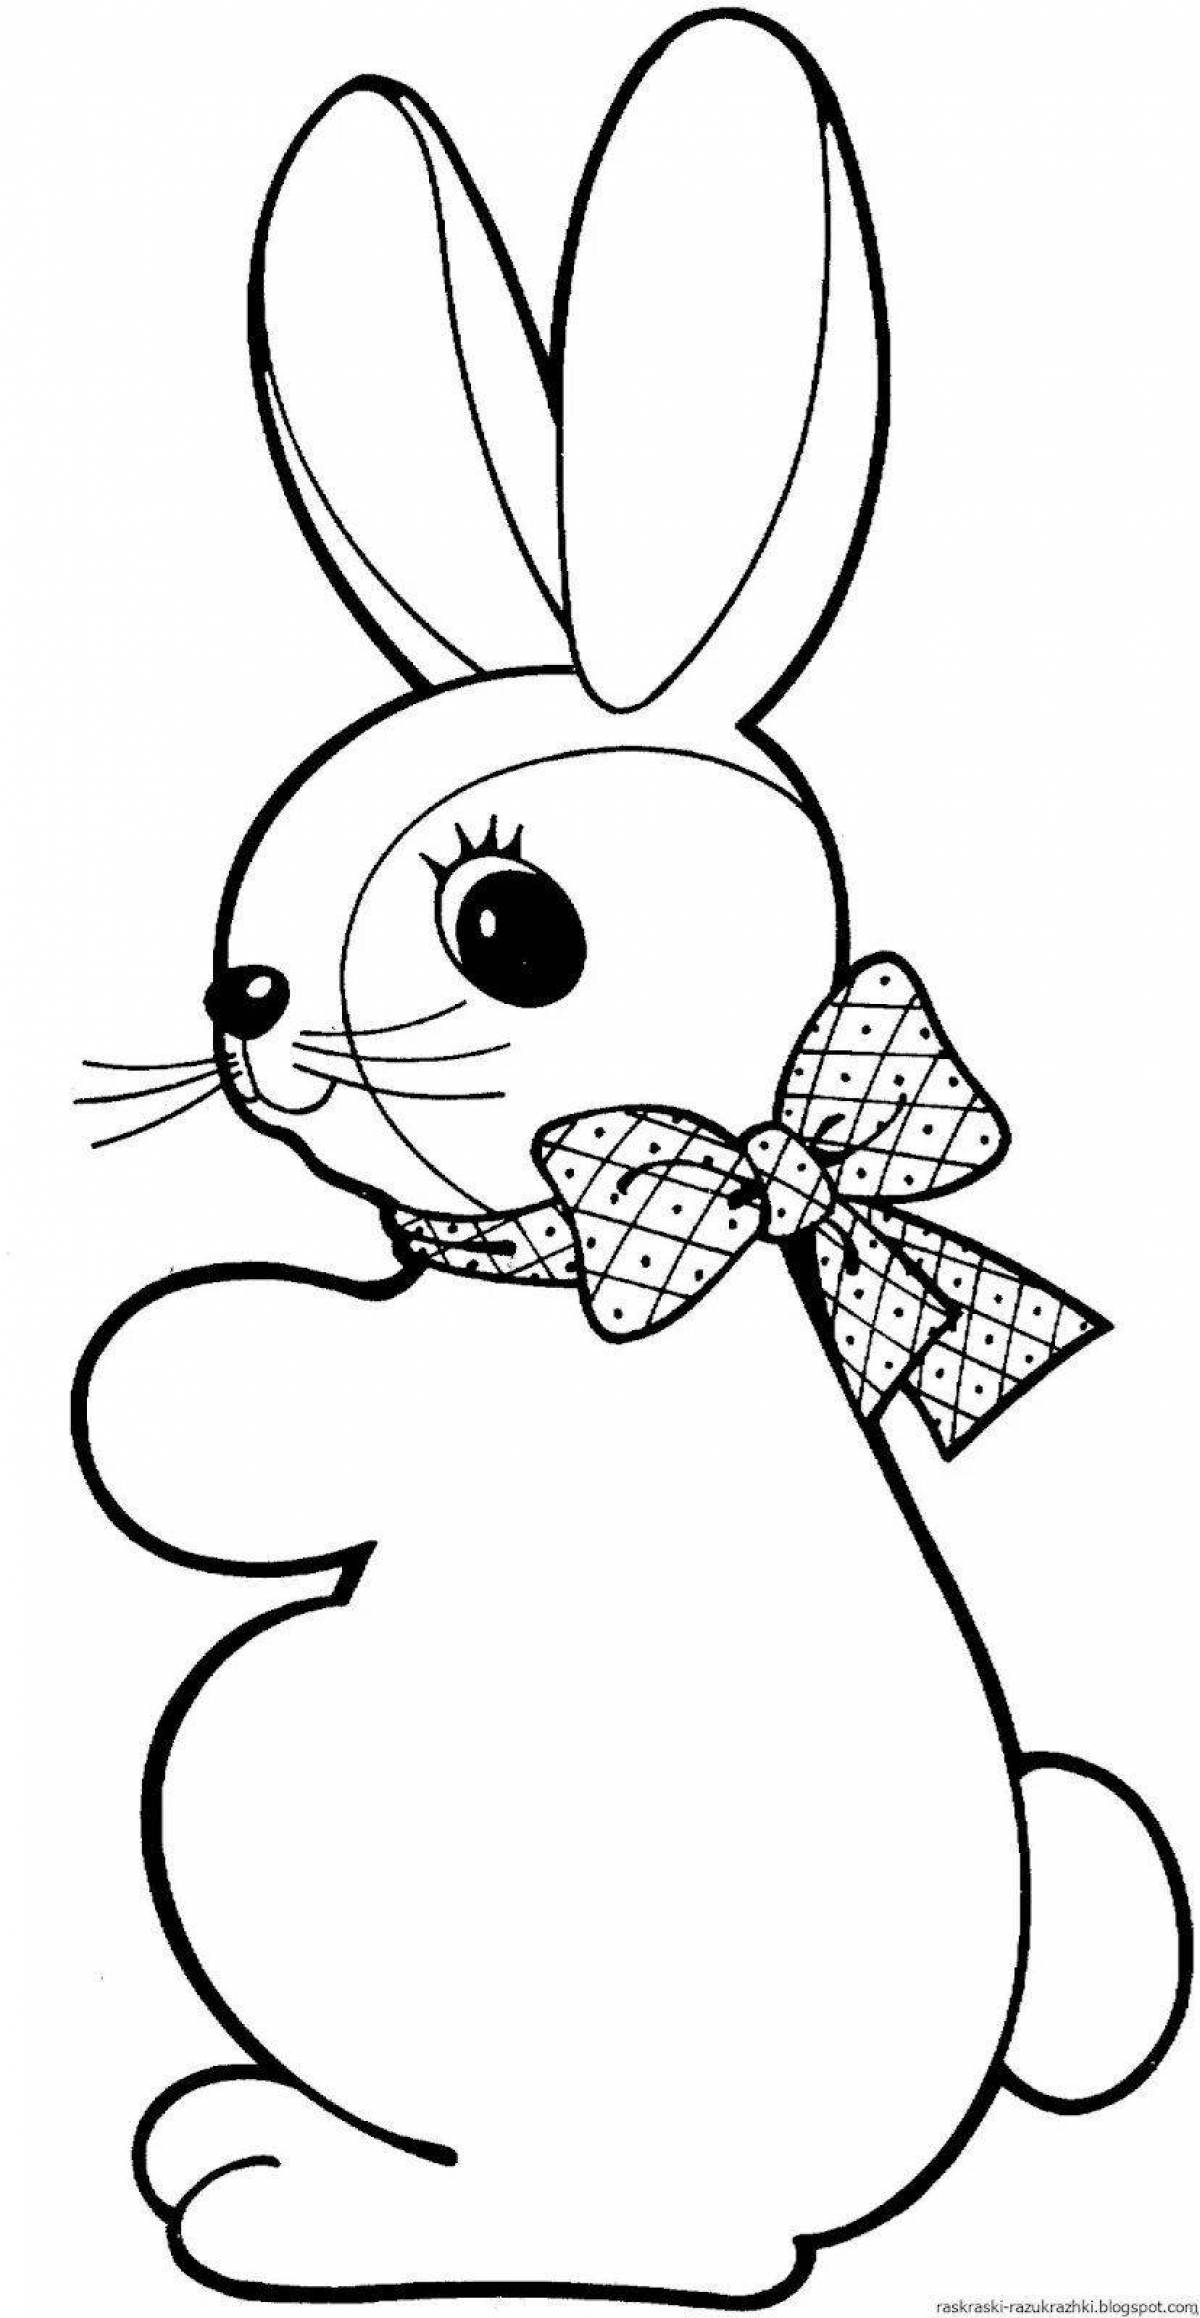 Fun coloring bunny toy